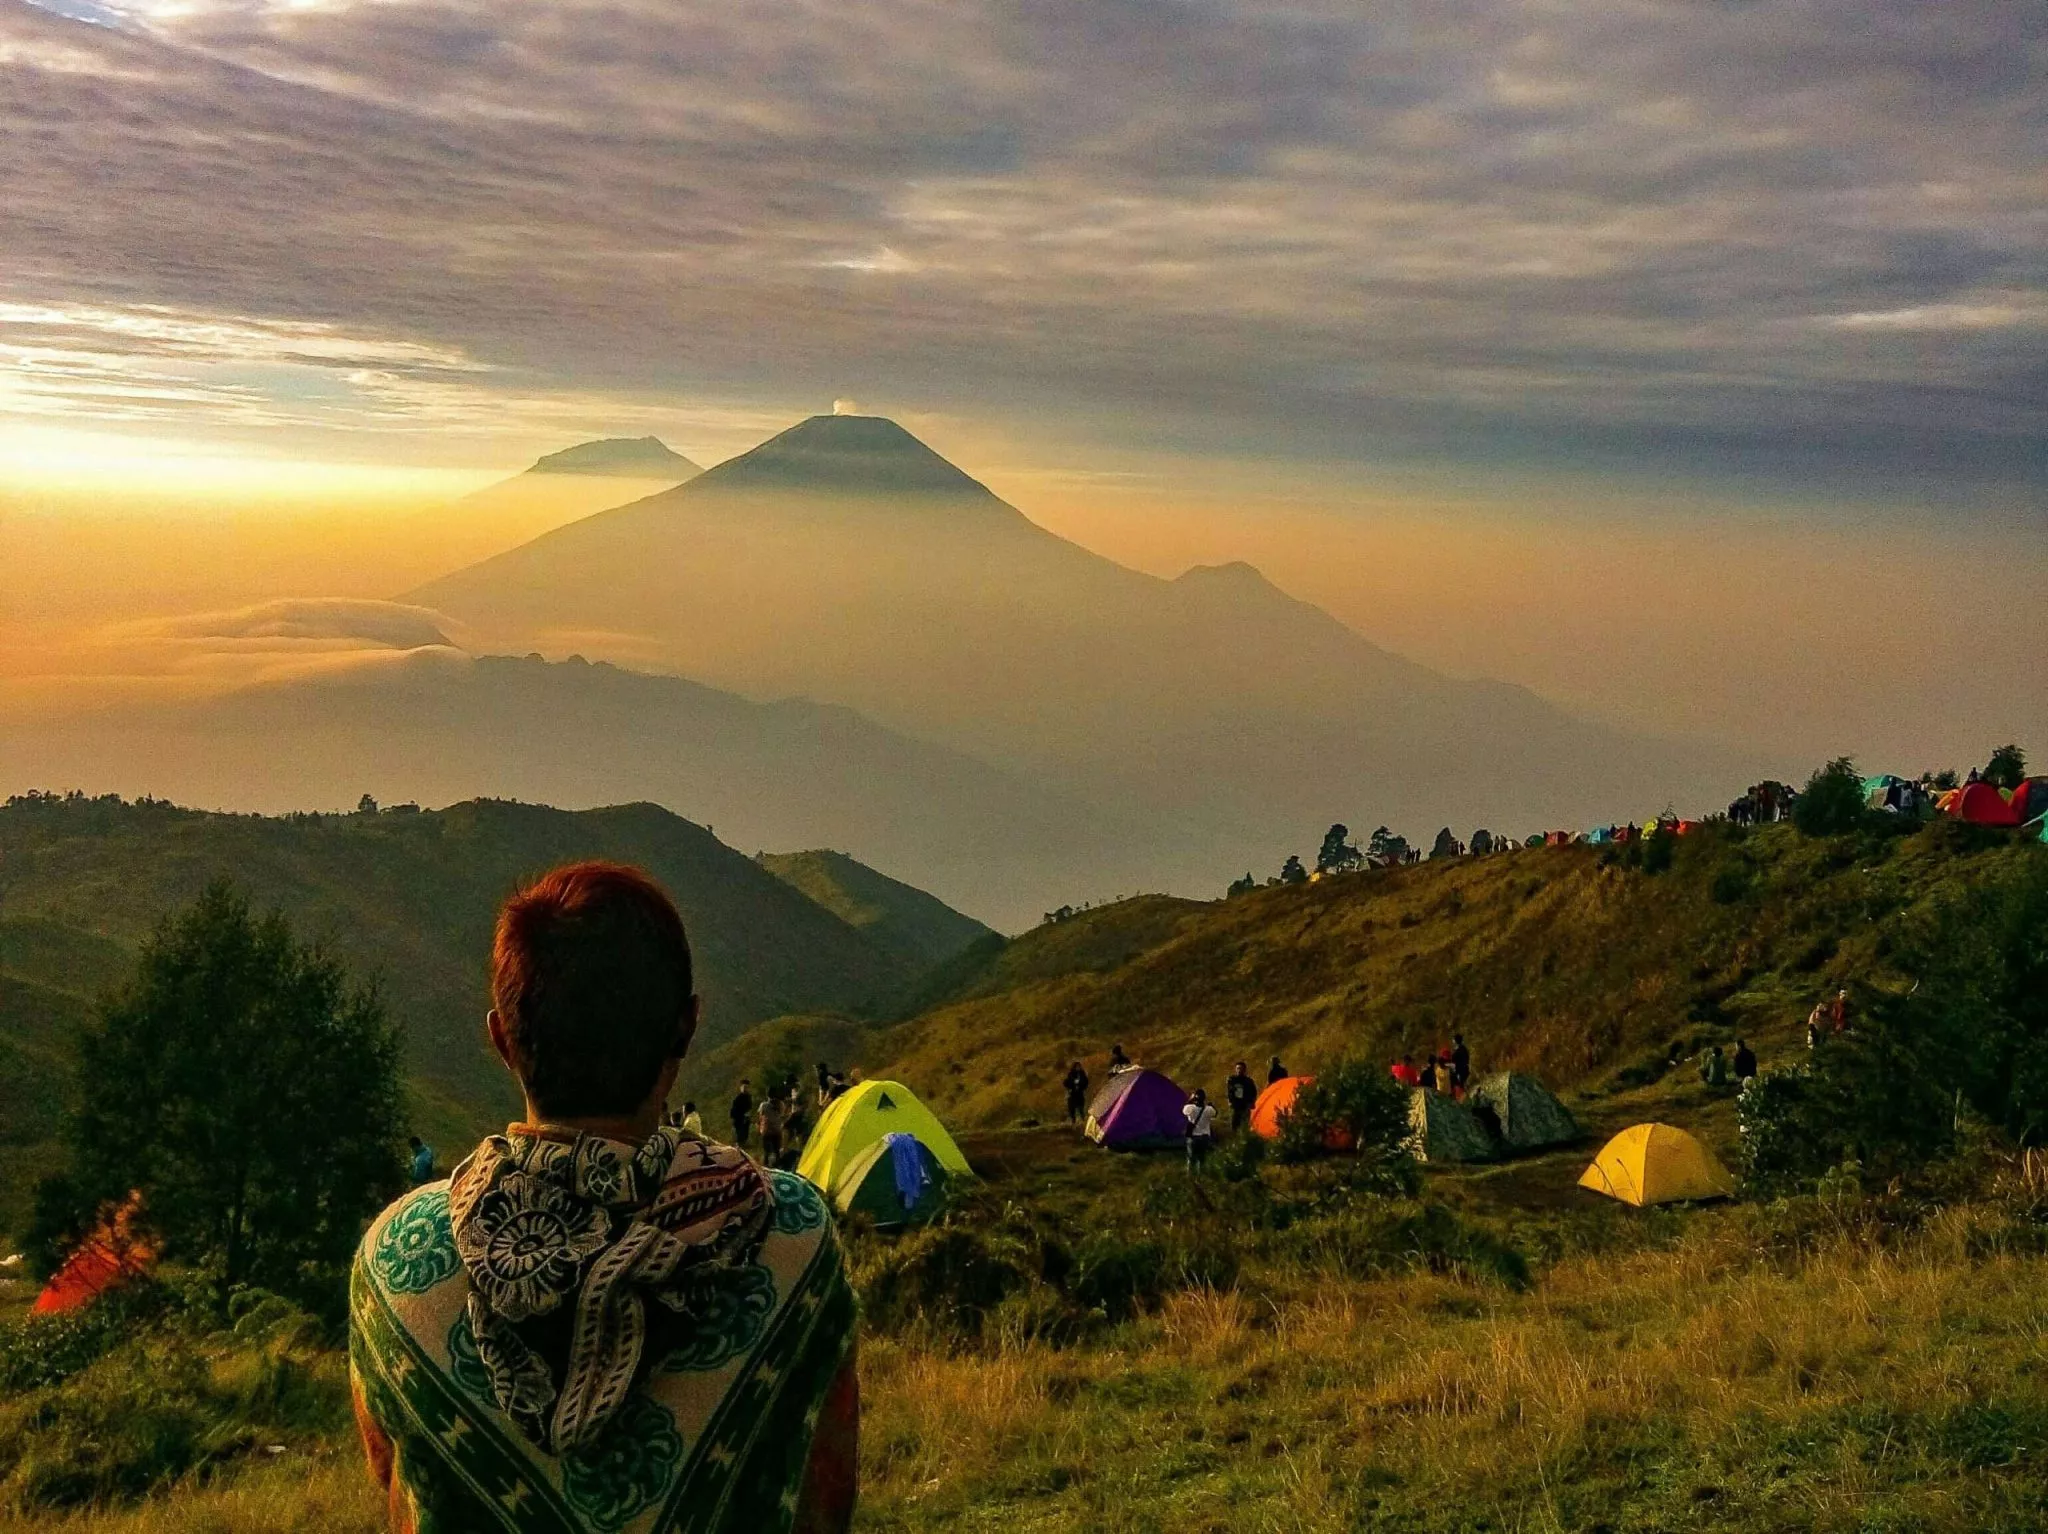 Gunung Sibayak in Indonesia, Central Asia | Trekking & Hiking - Rated 3.6